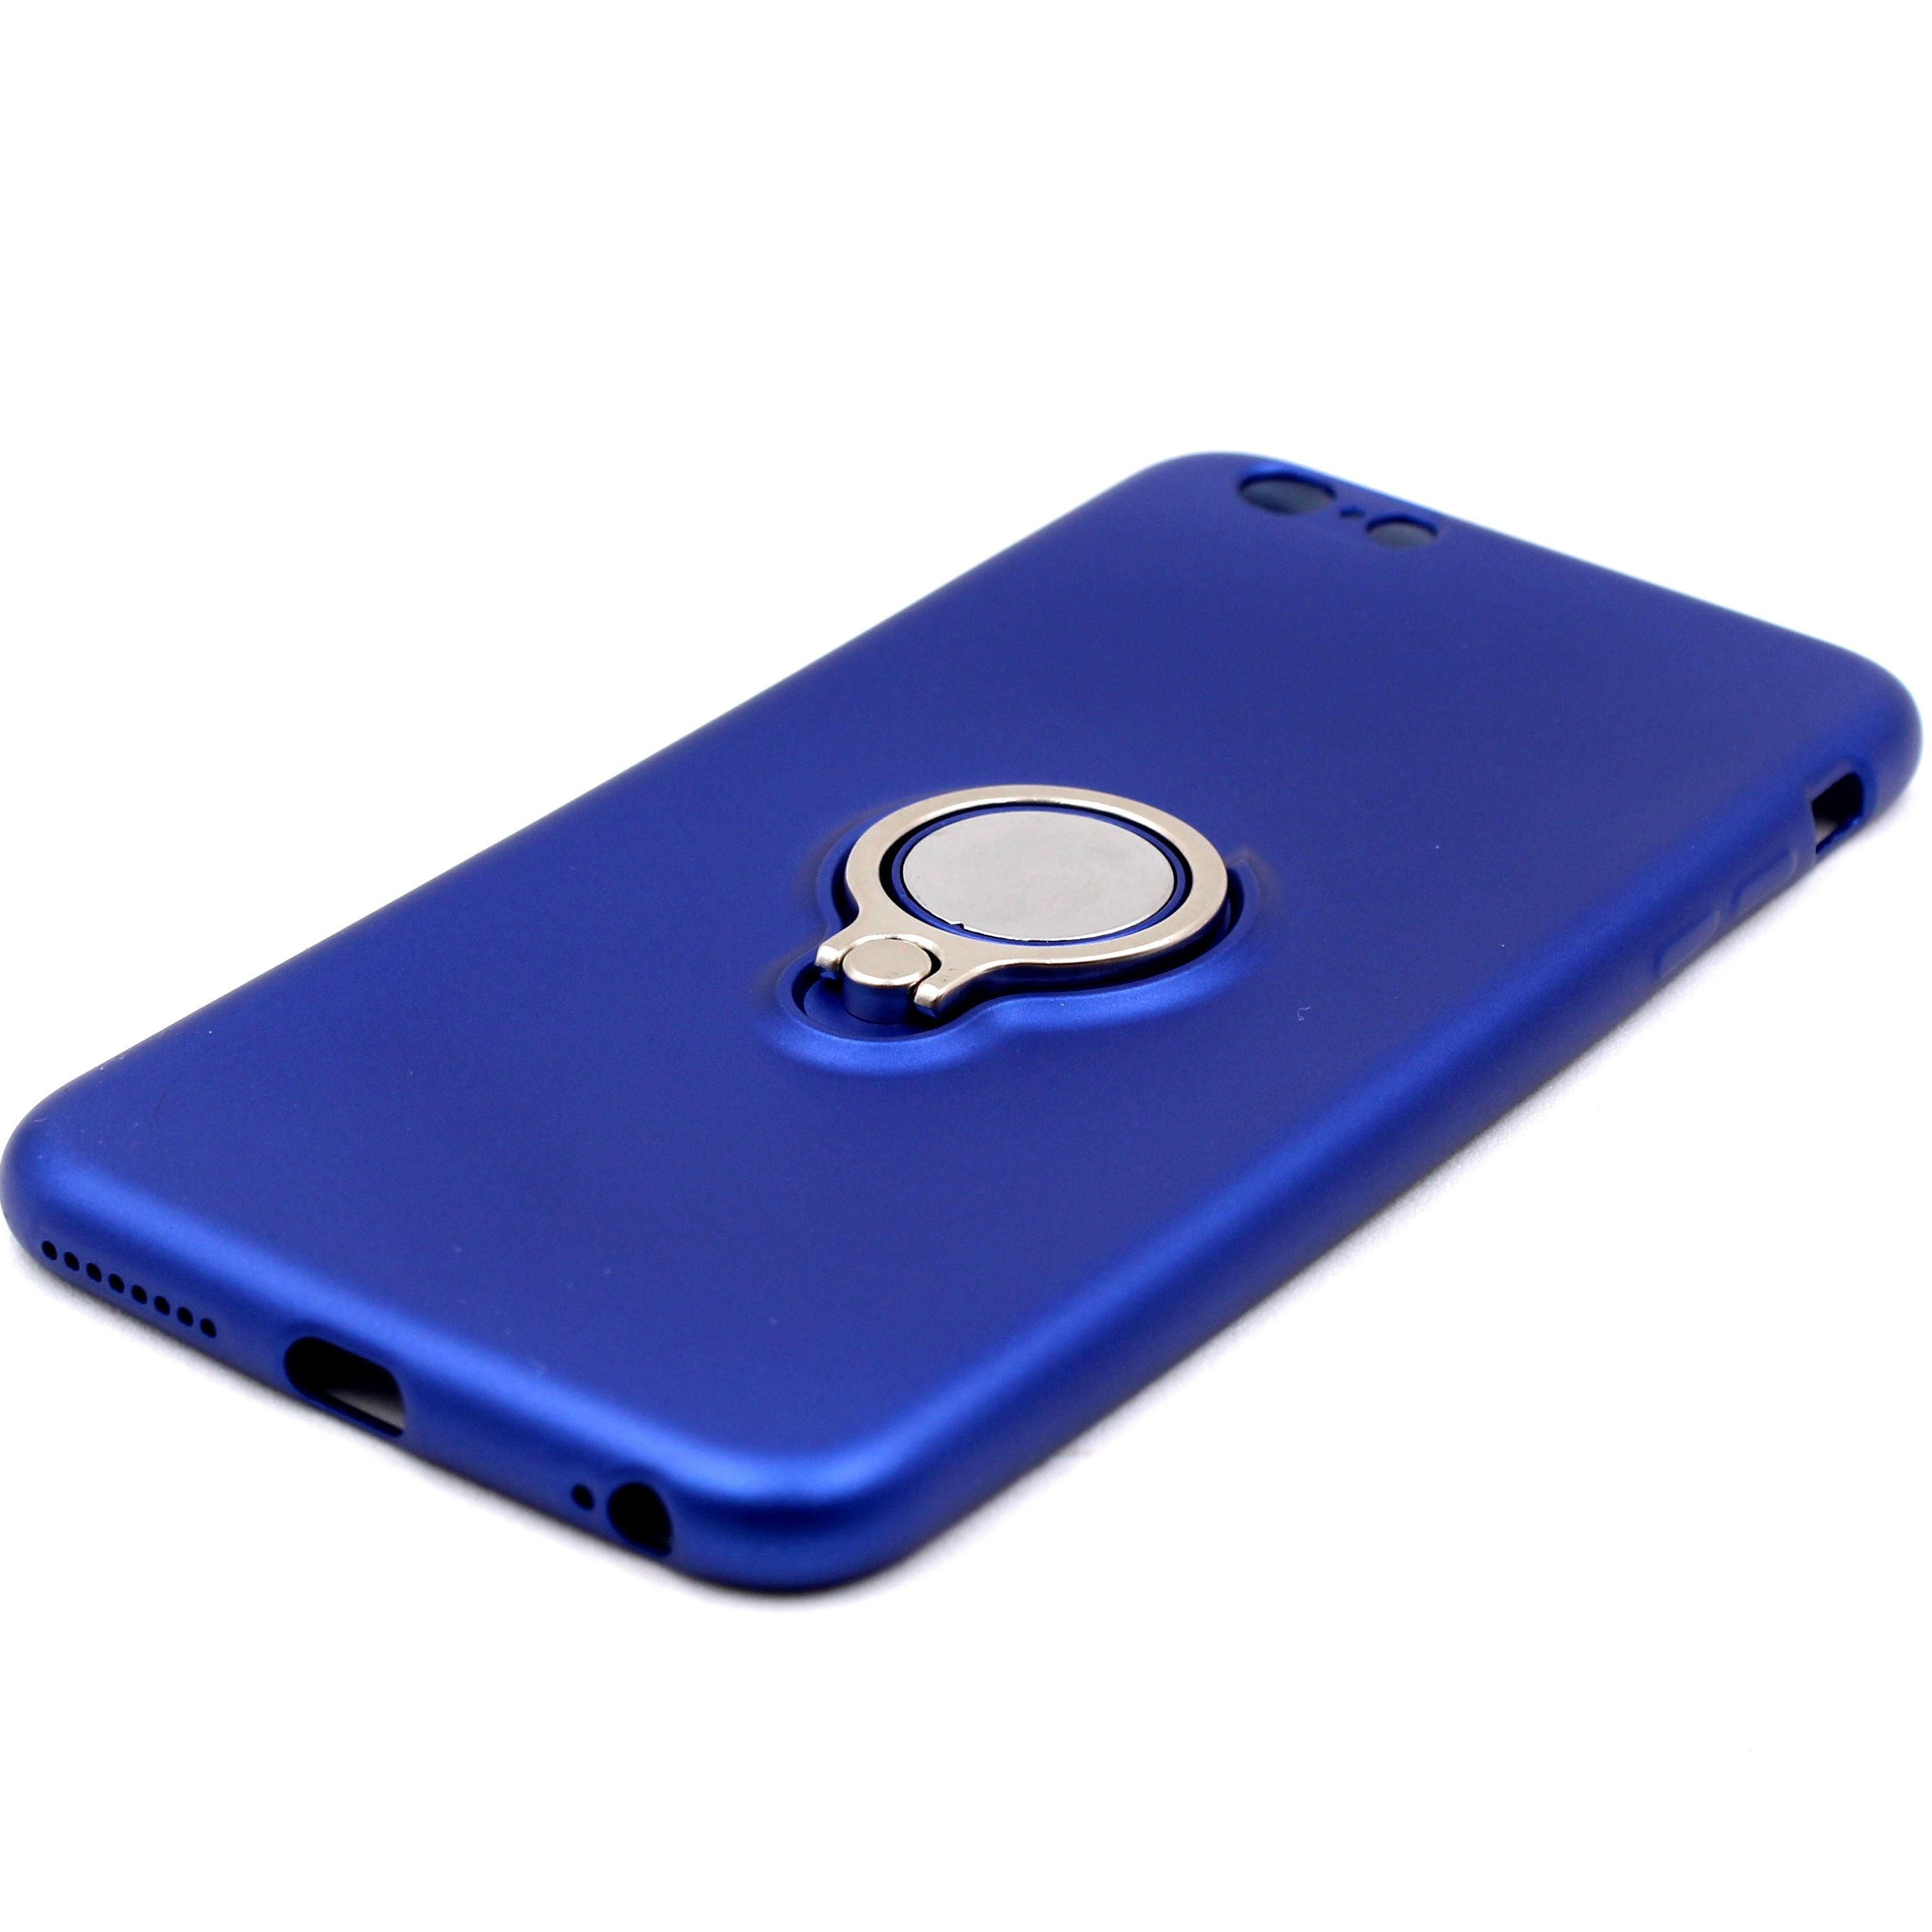 Capa Tpu 3 em 1 para IPhone - Azul Royal